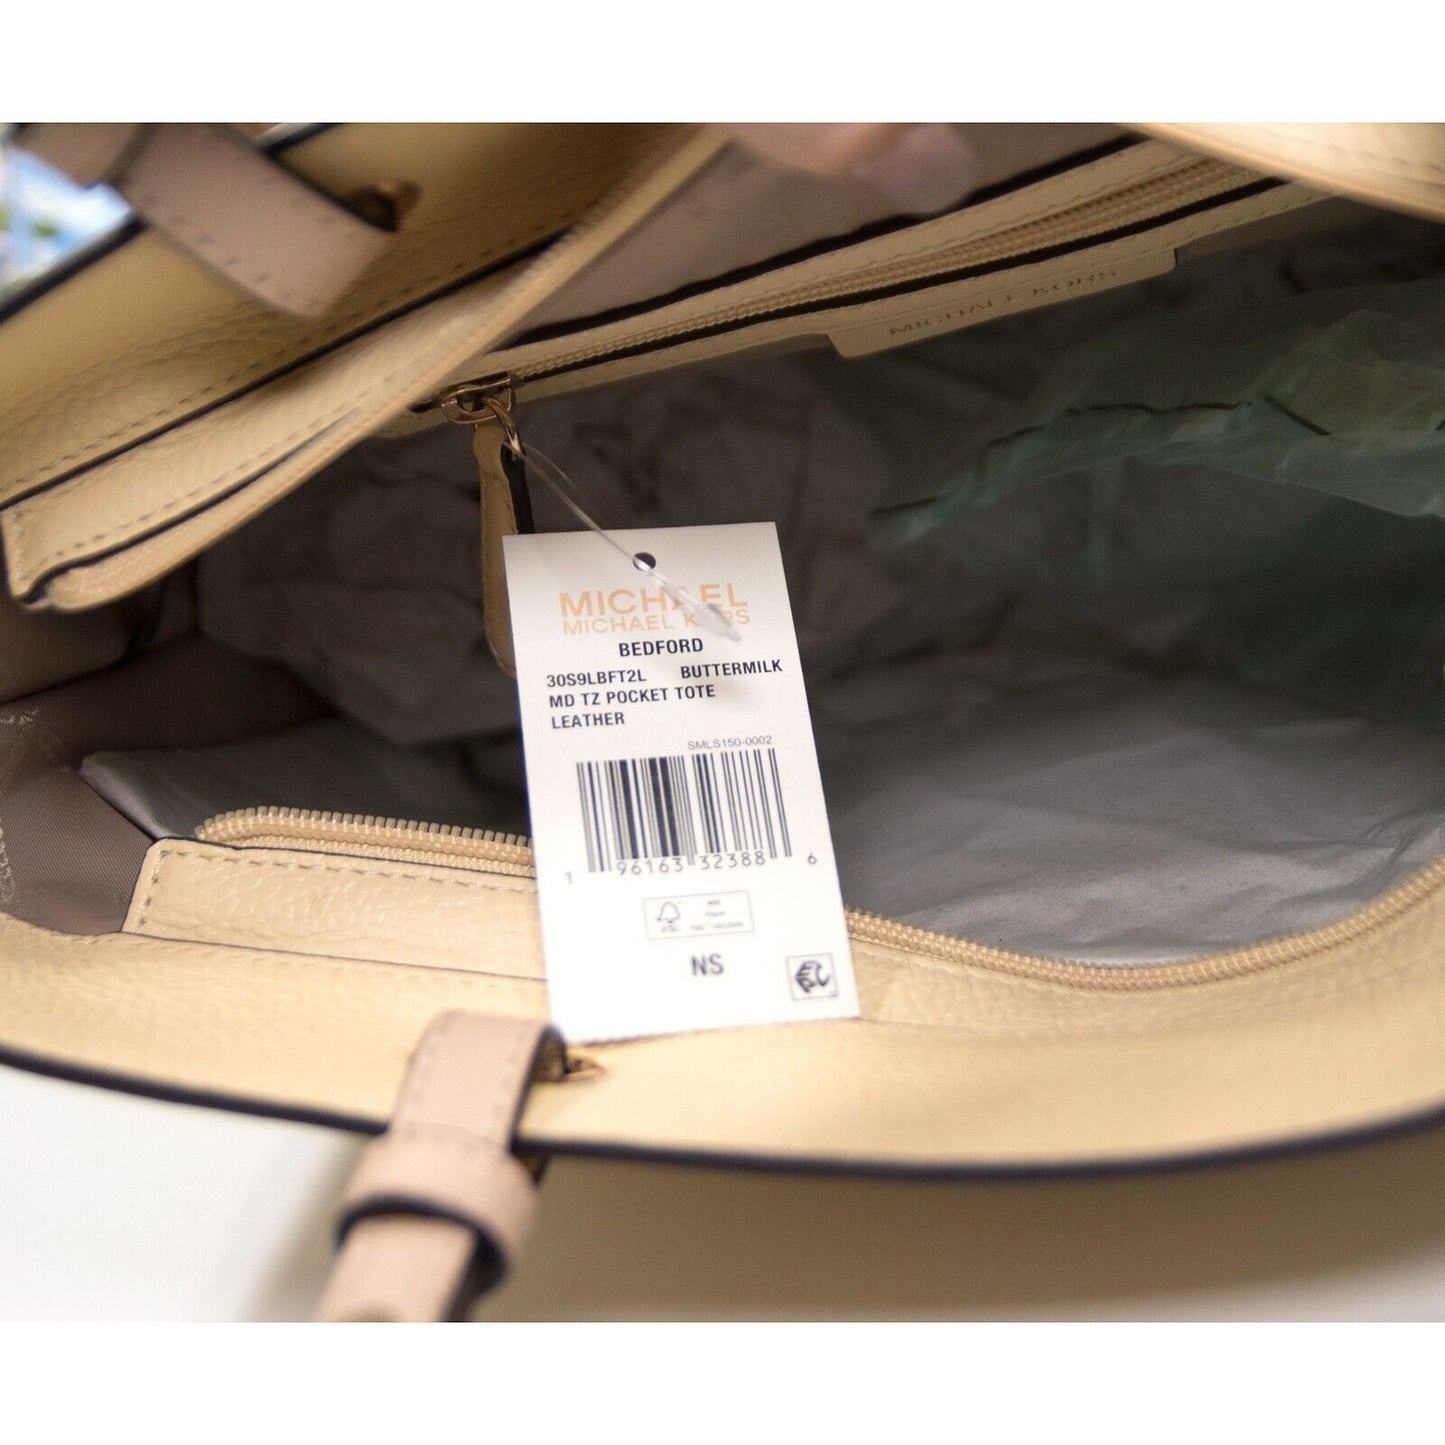 Michael Kors Bedford Buttermilk Leather Pocket Tote Bag NWT